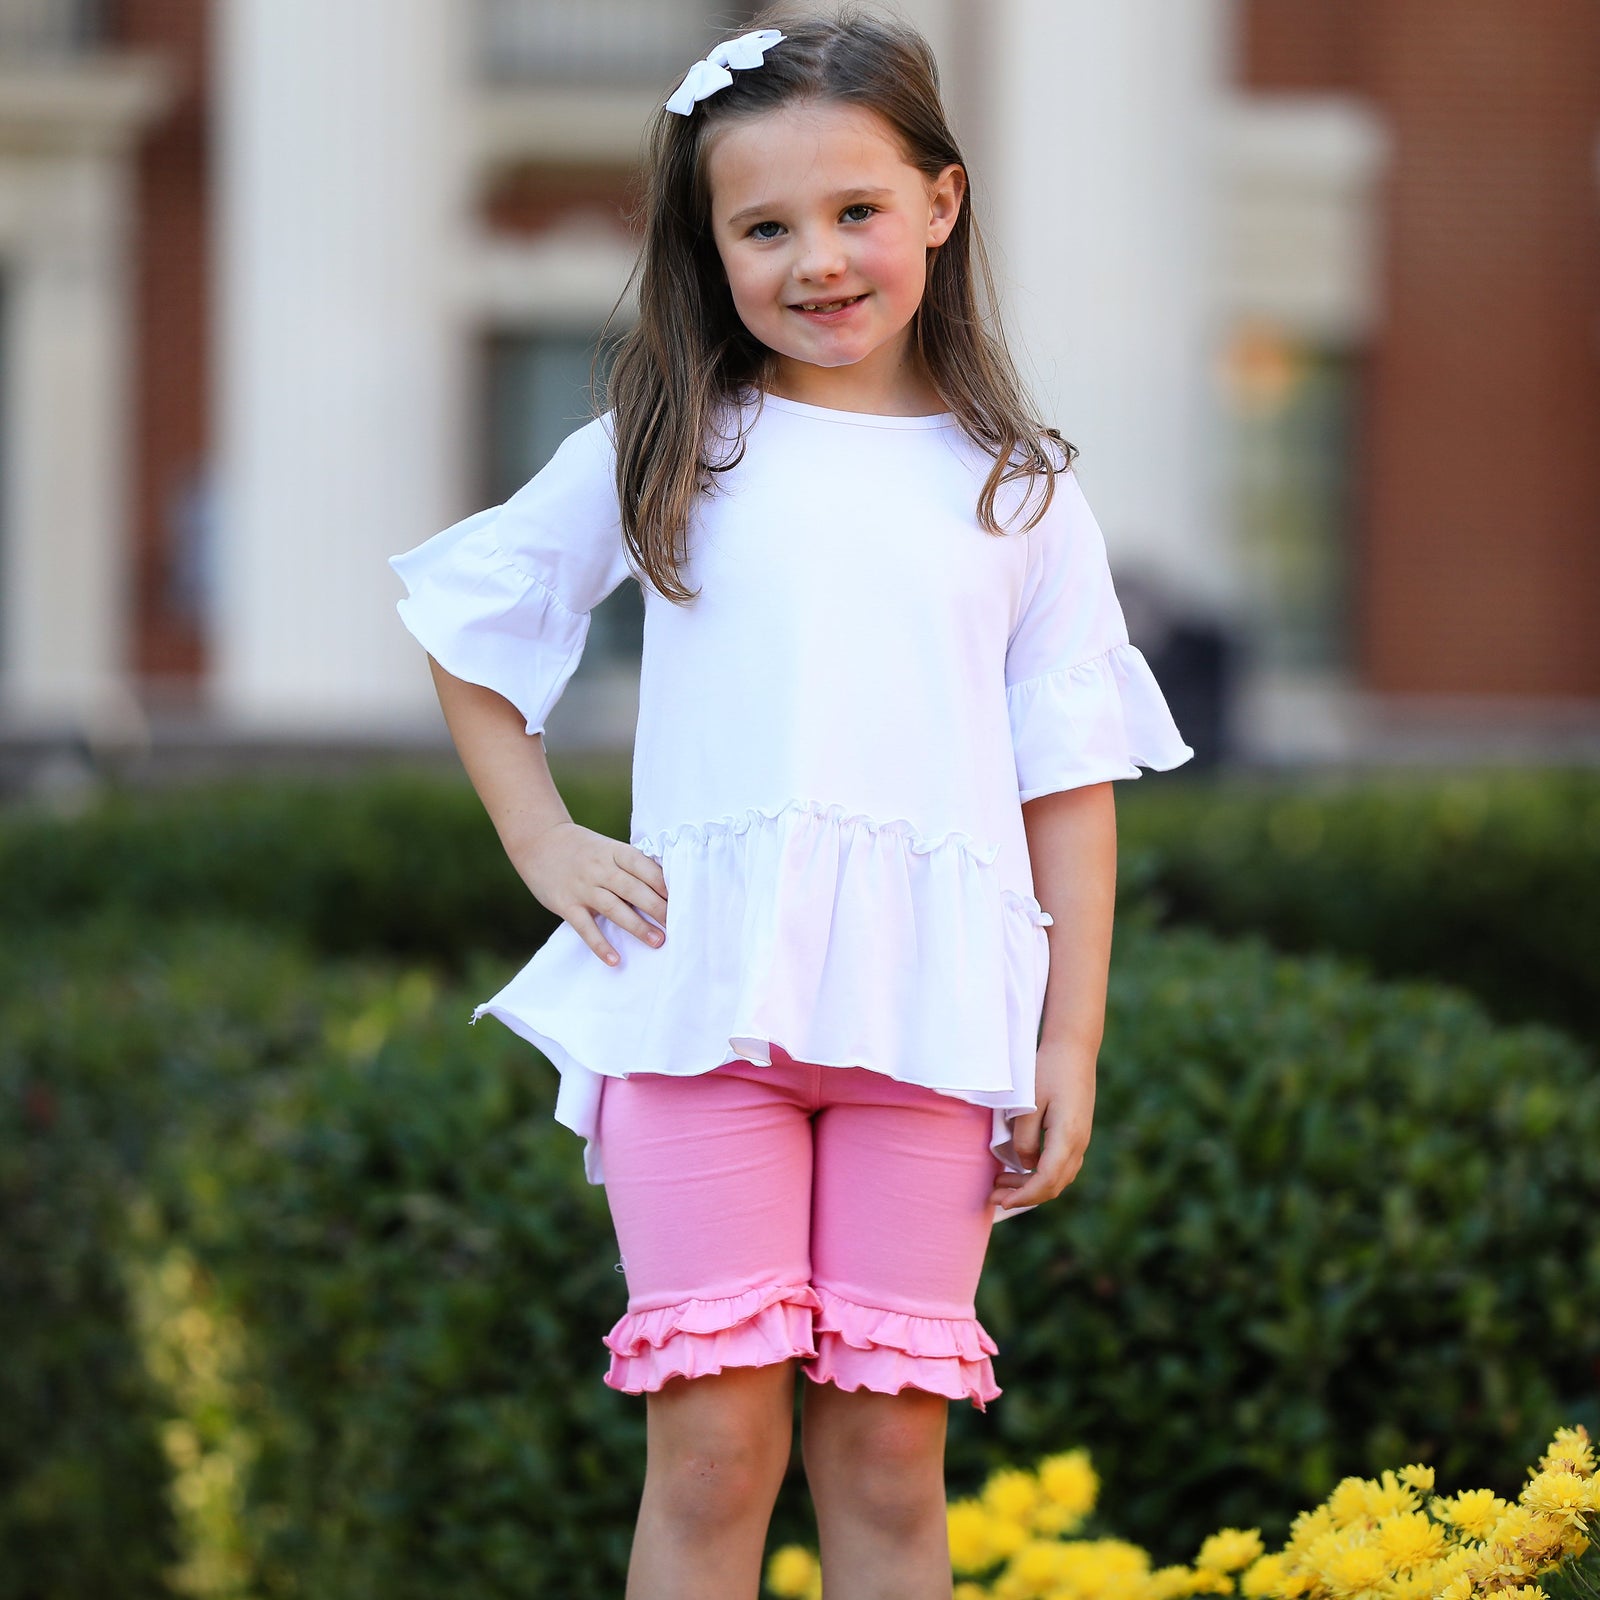 White Angel Sleeve Ruffle Top Shirt Little Toddler Big Girls' Clothing Sizes 2/3T - 7/8 by AnnLoren